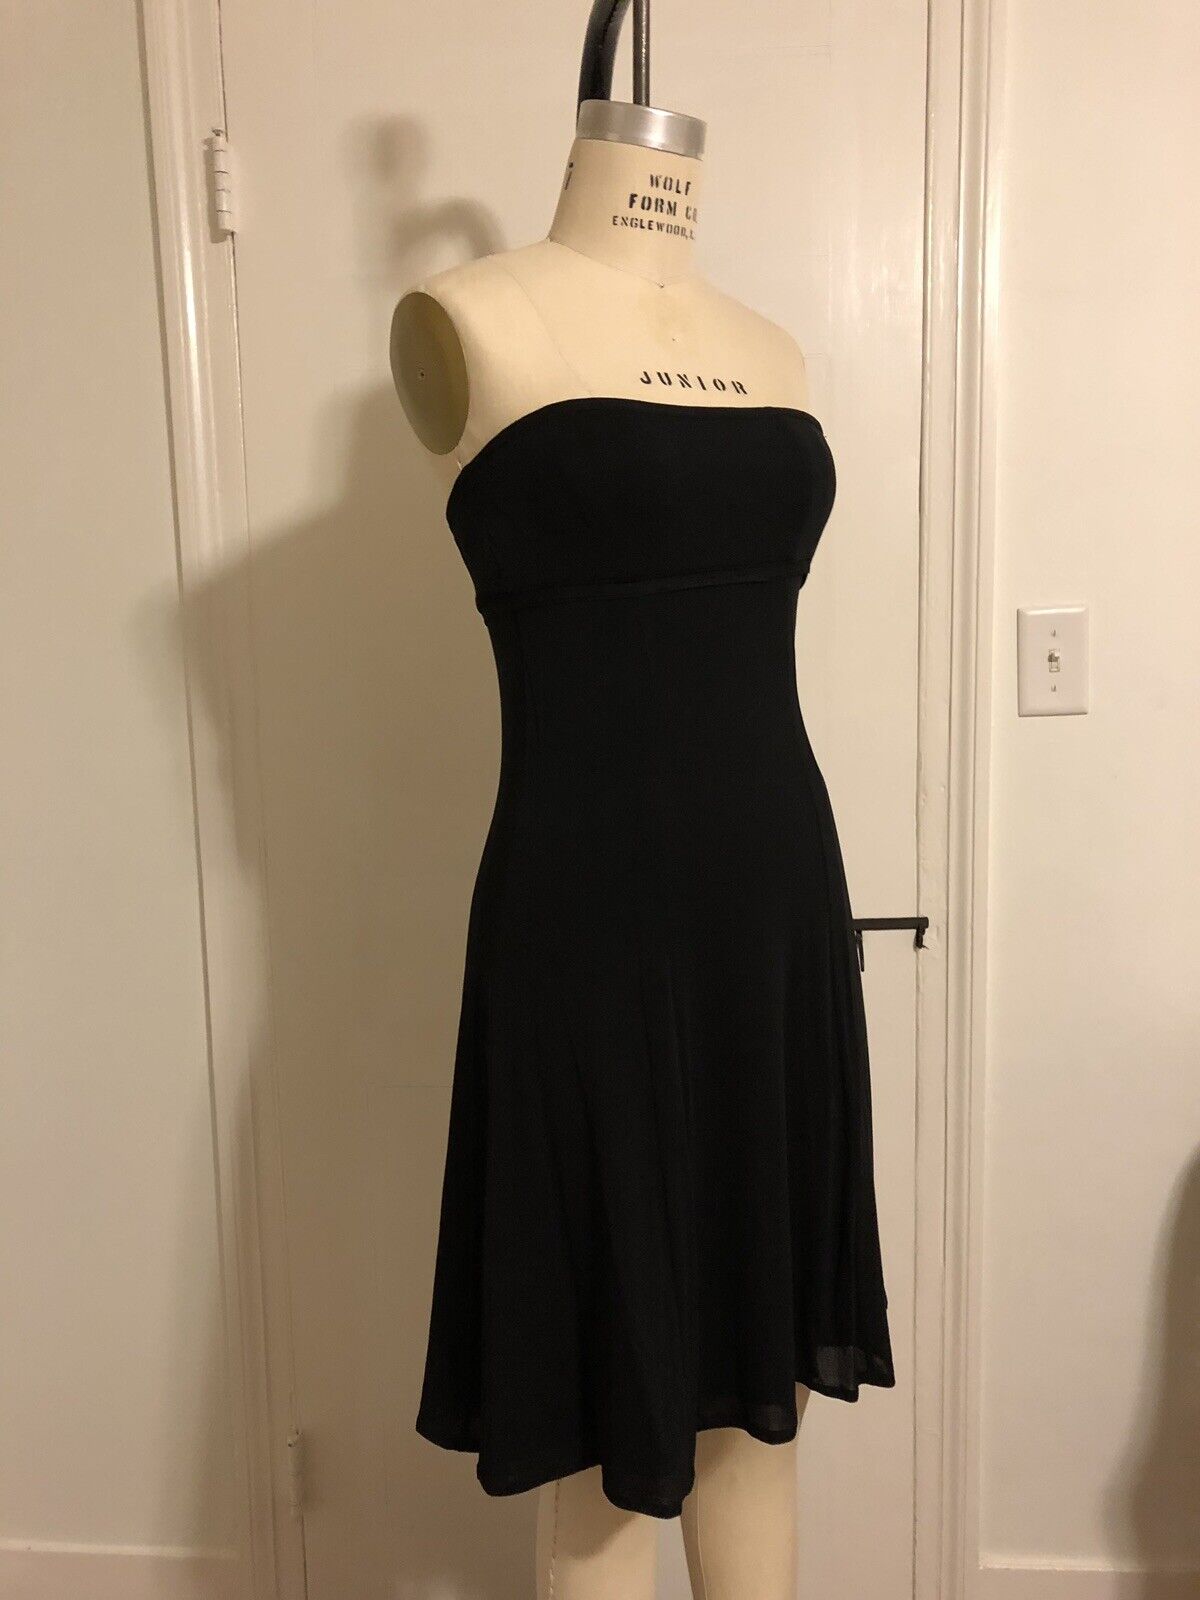 Narciso Rodriguez Black Strapless Dress - Size 4